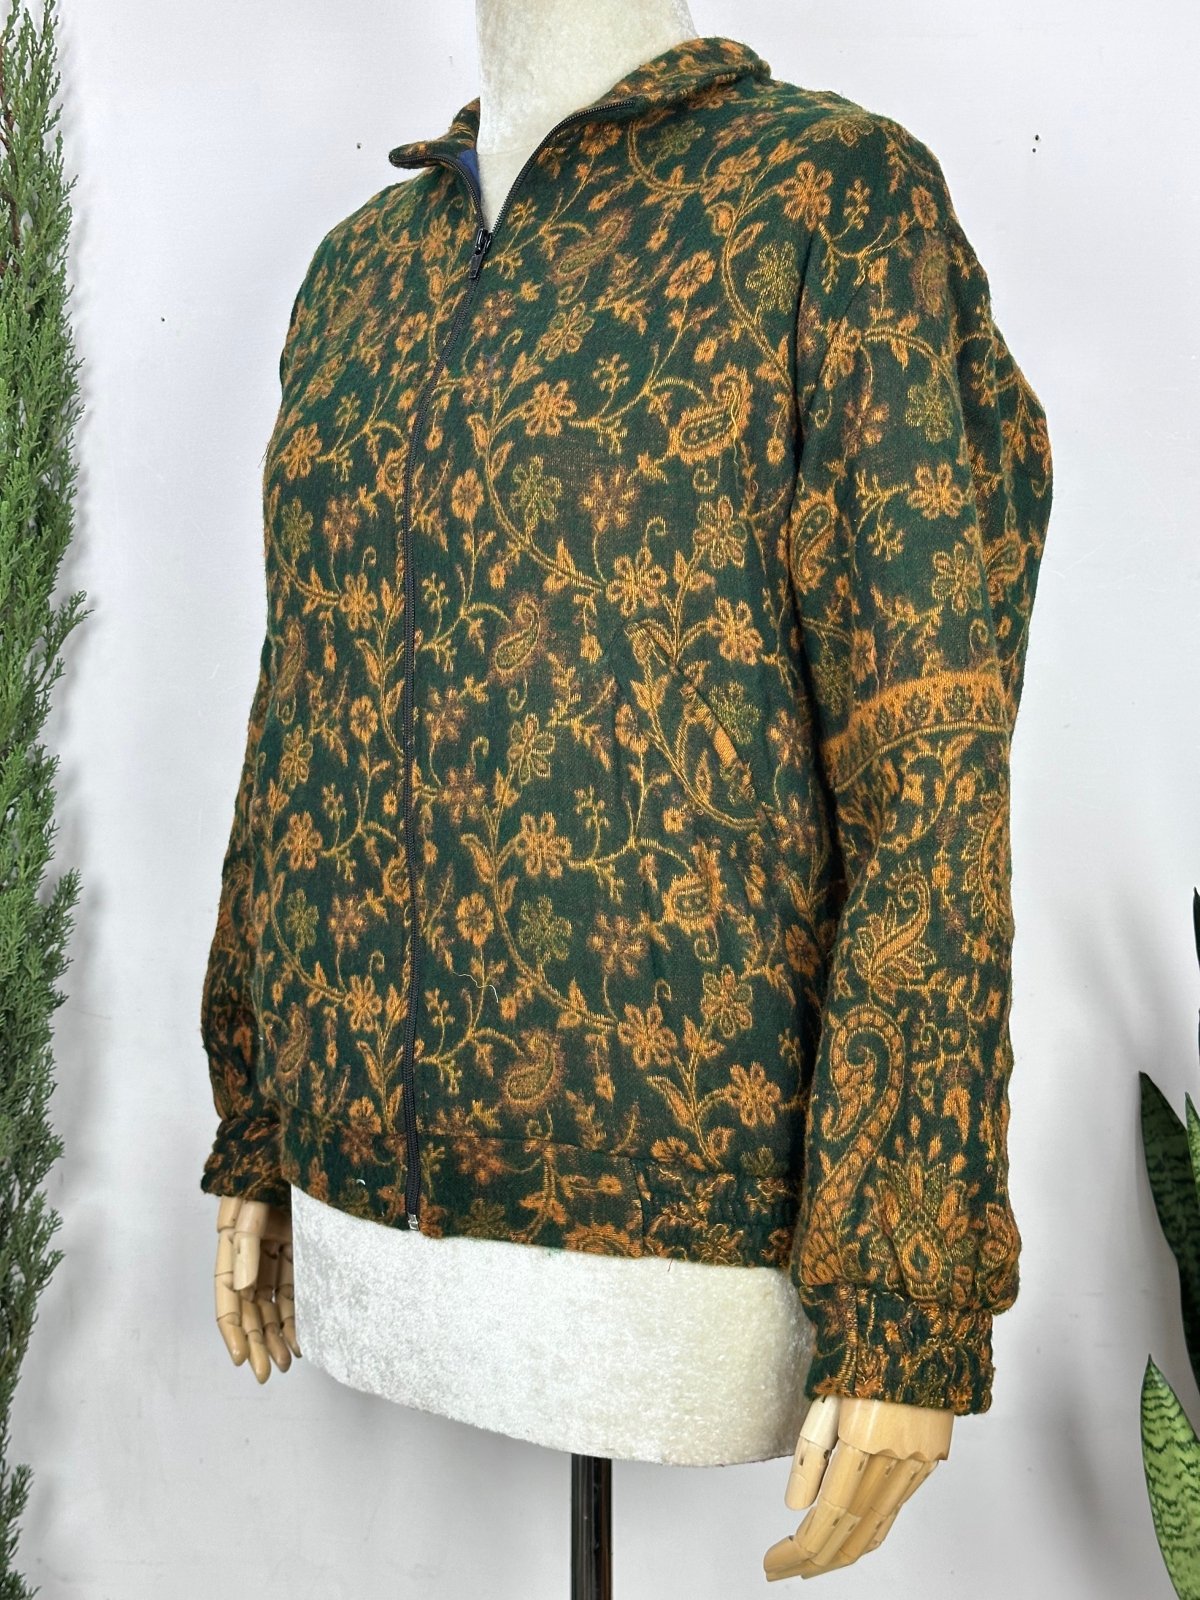 Cozy Yak Wool Blend Bomber Bolero Jacket | Warm Comfy Soft Winter Fashion Casual Party Wear | Boho Chic Paisley Floral Black Rust Jacket - The Eastern Loom